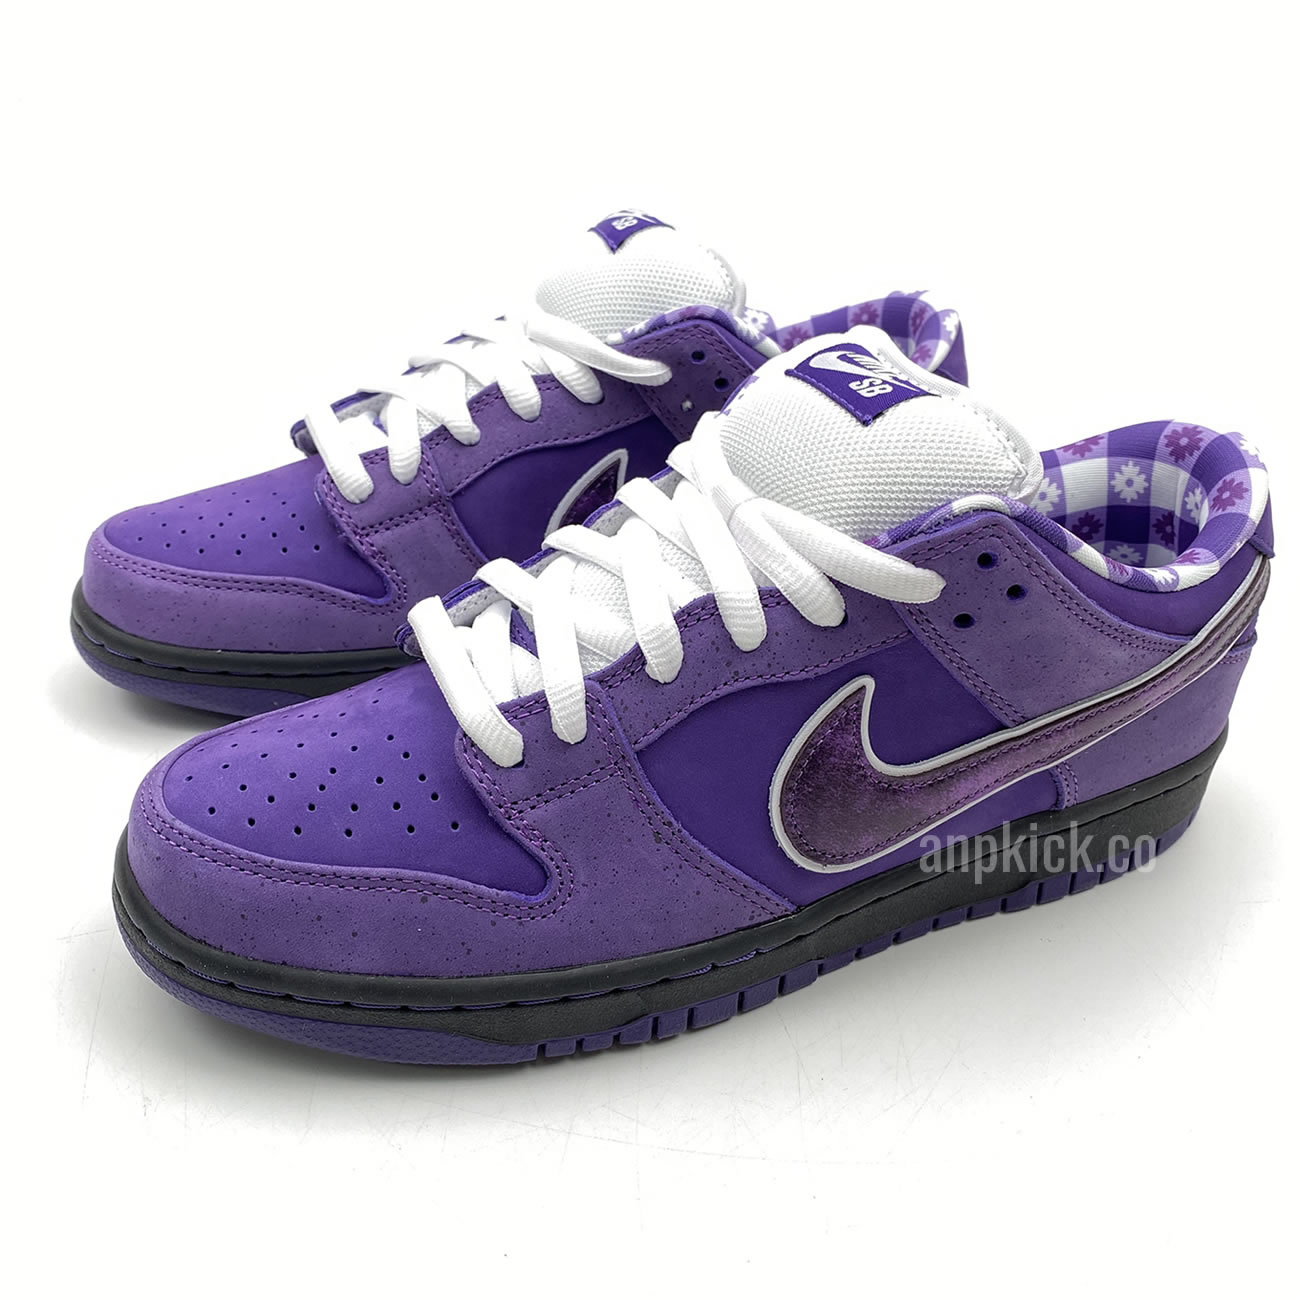 Nike Dunk Sb Low Pro Og Qs Concepts Purple Lobster Bv1310 555 (2) - newkick.org